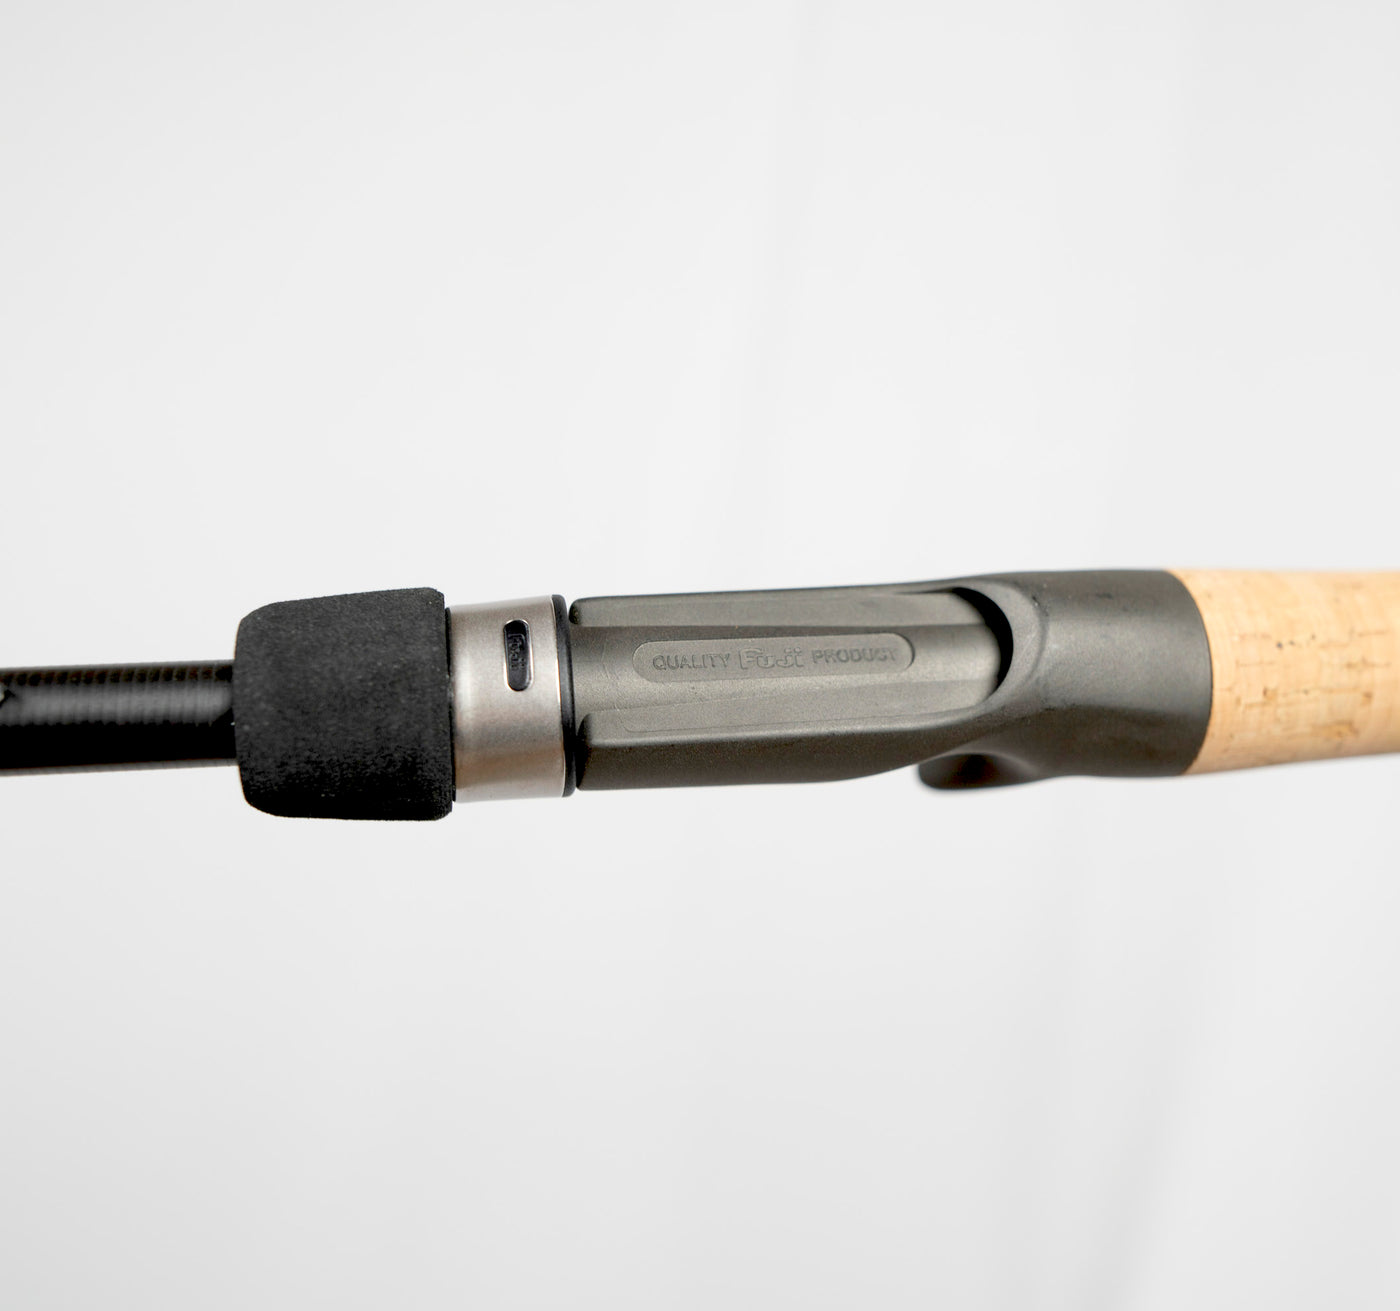 Rod / Reel For Weightless Fluke Fishing - Fishing Rods, Reels